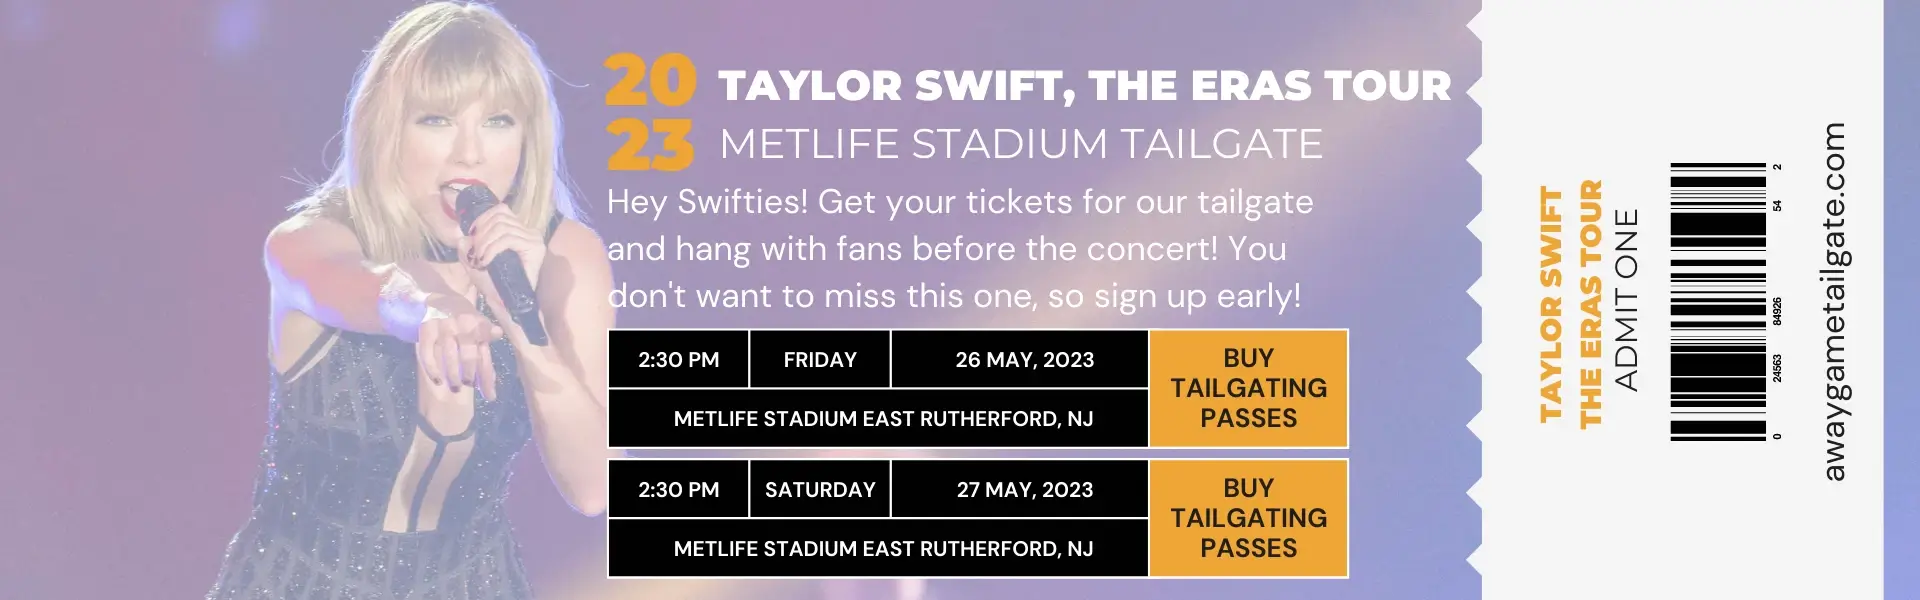 Taylor Swift, The Eras Tour MetLife Stadium Tailgate